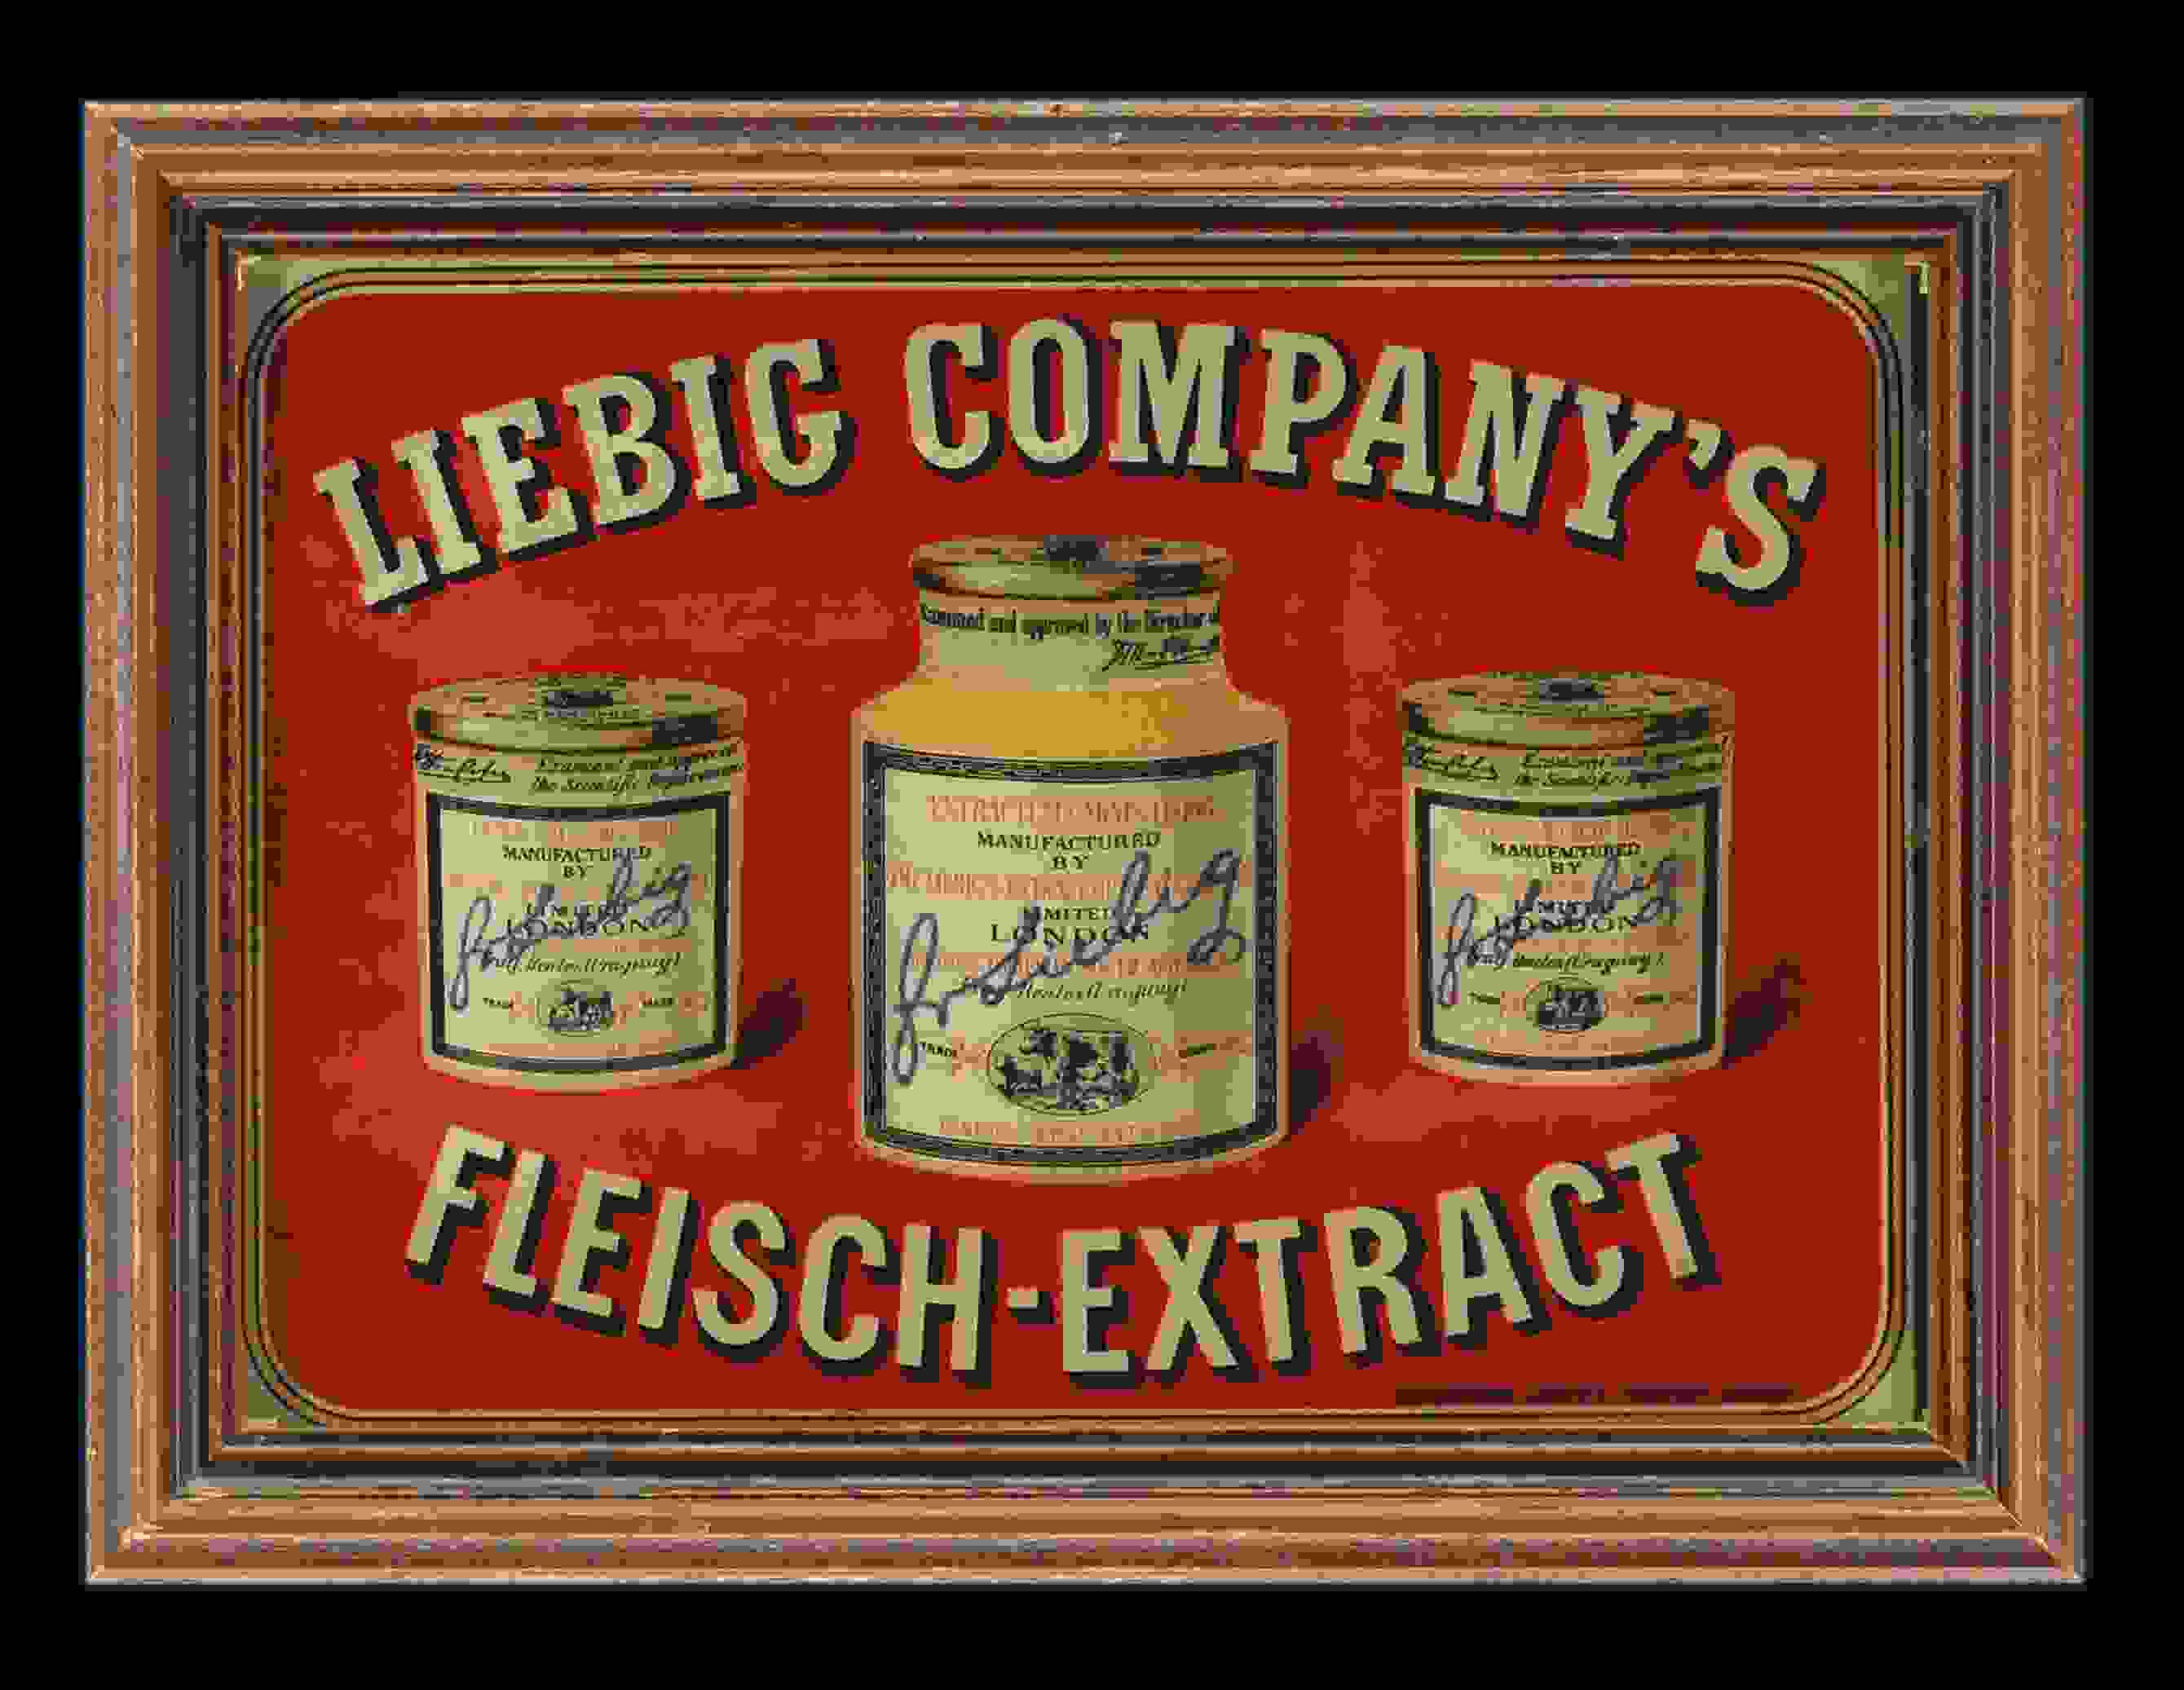 Liebig Company's Fleisch-Extract 